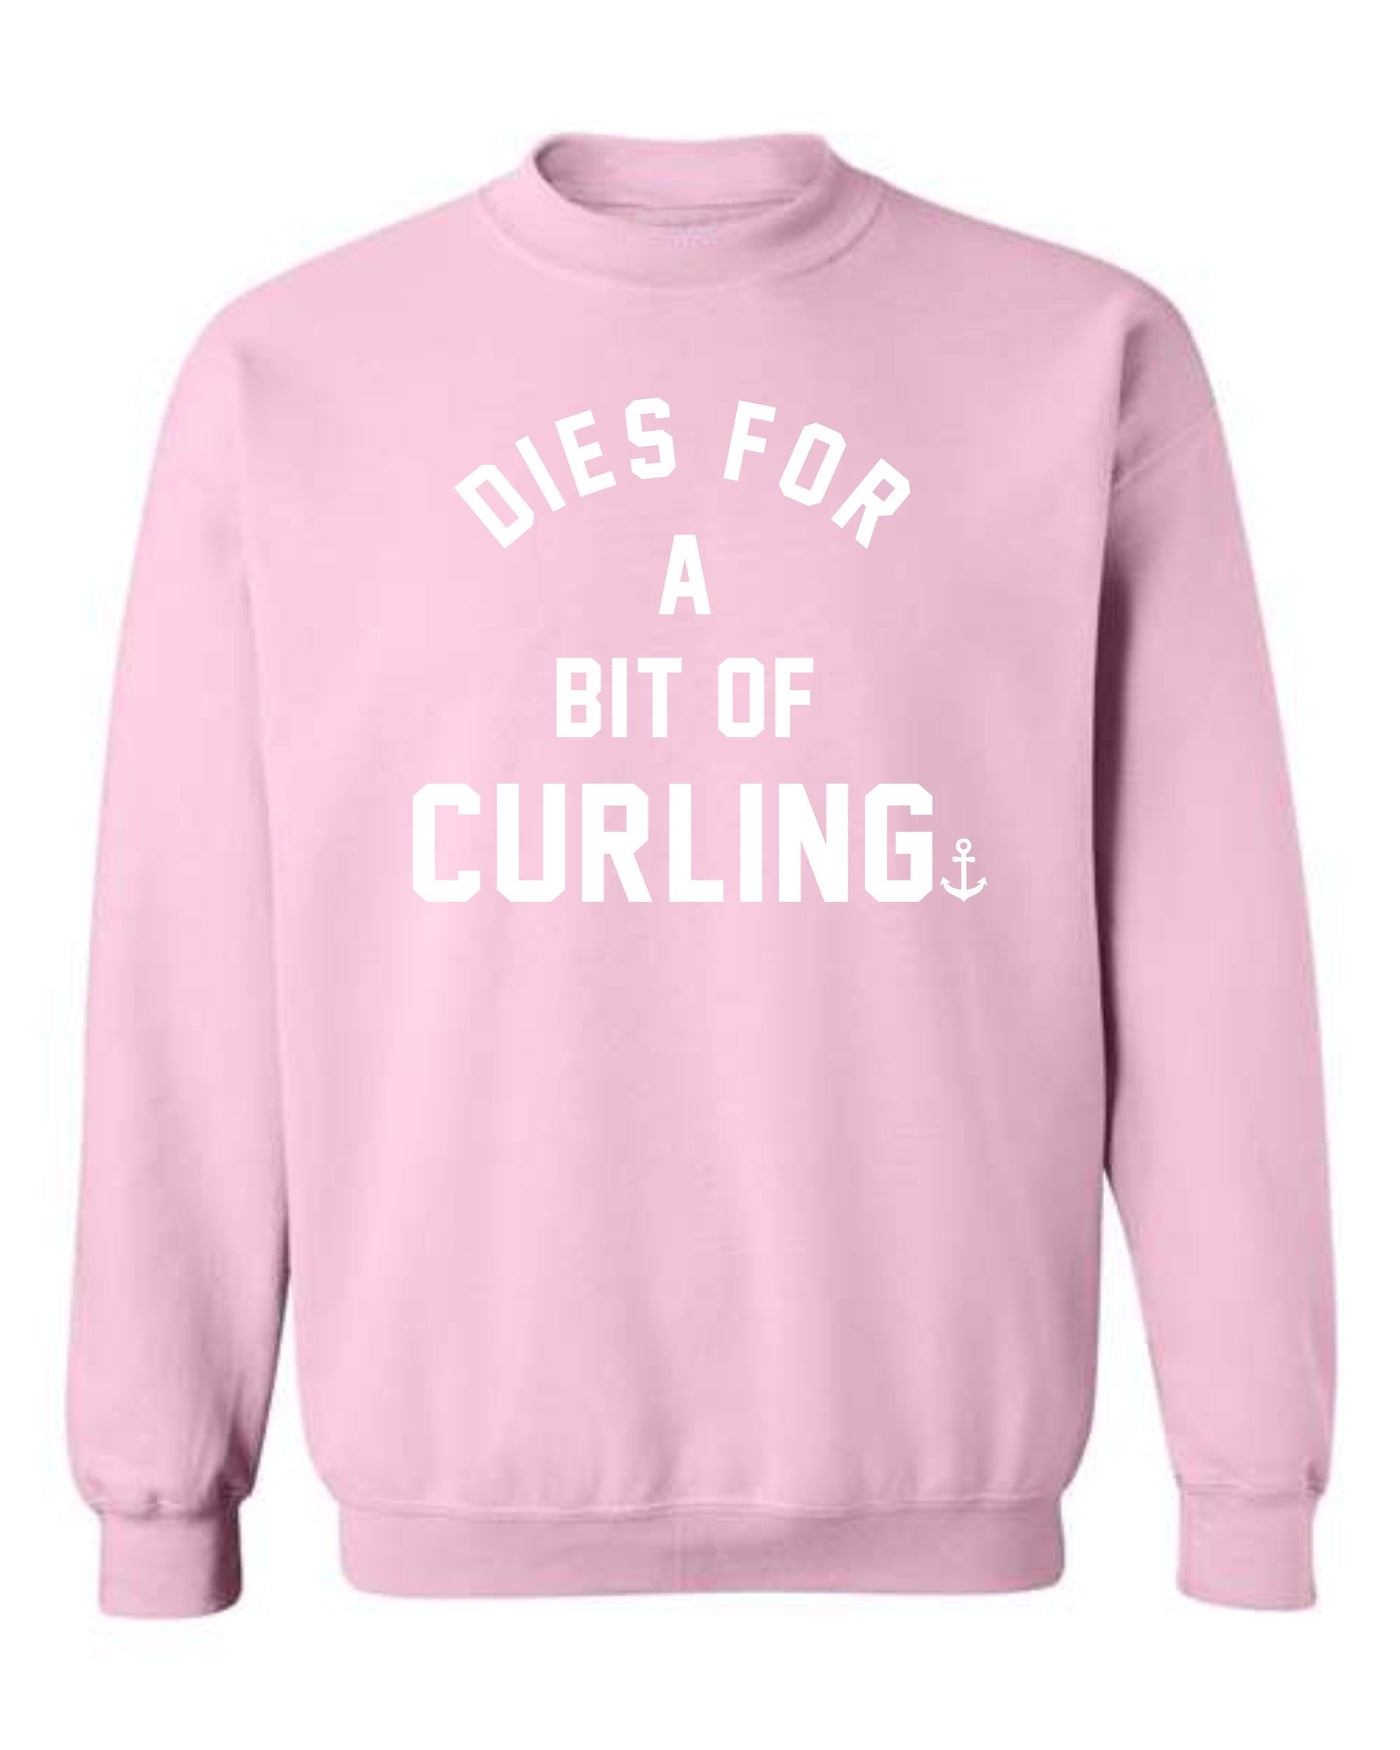 "Dies For A Bit Of Curling" Unisex Crewneck Sweatshirt